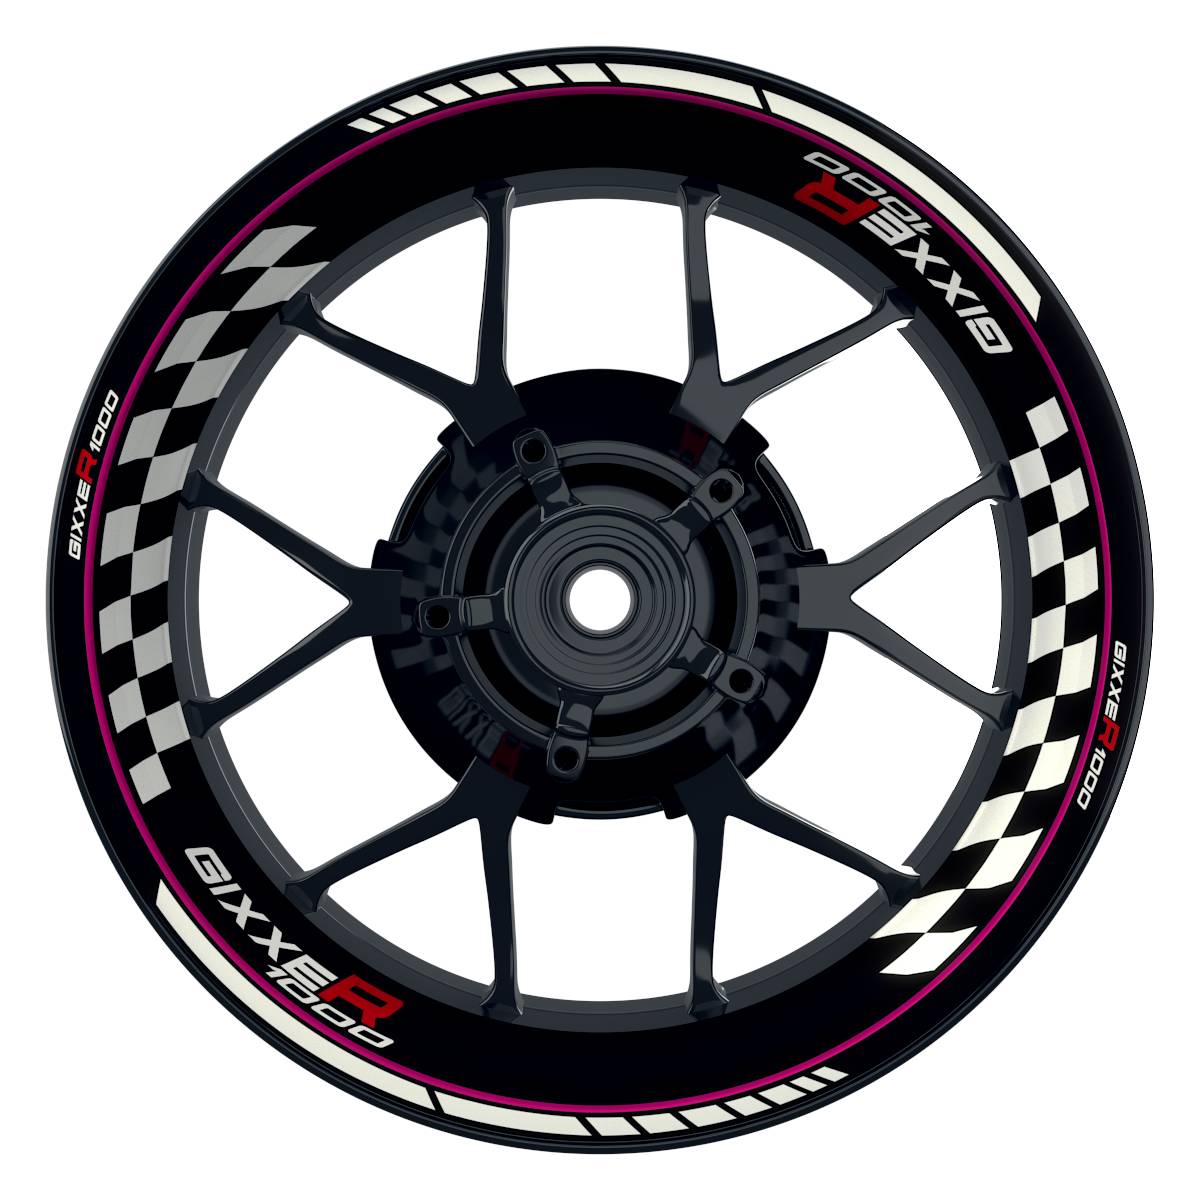 GIXXER1000 Grid schwarz pink Wheelsticker Felgenaufkleber